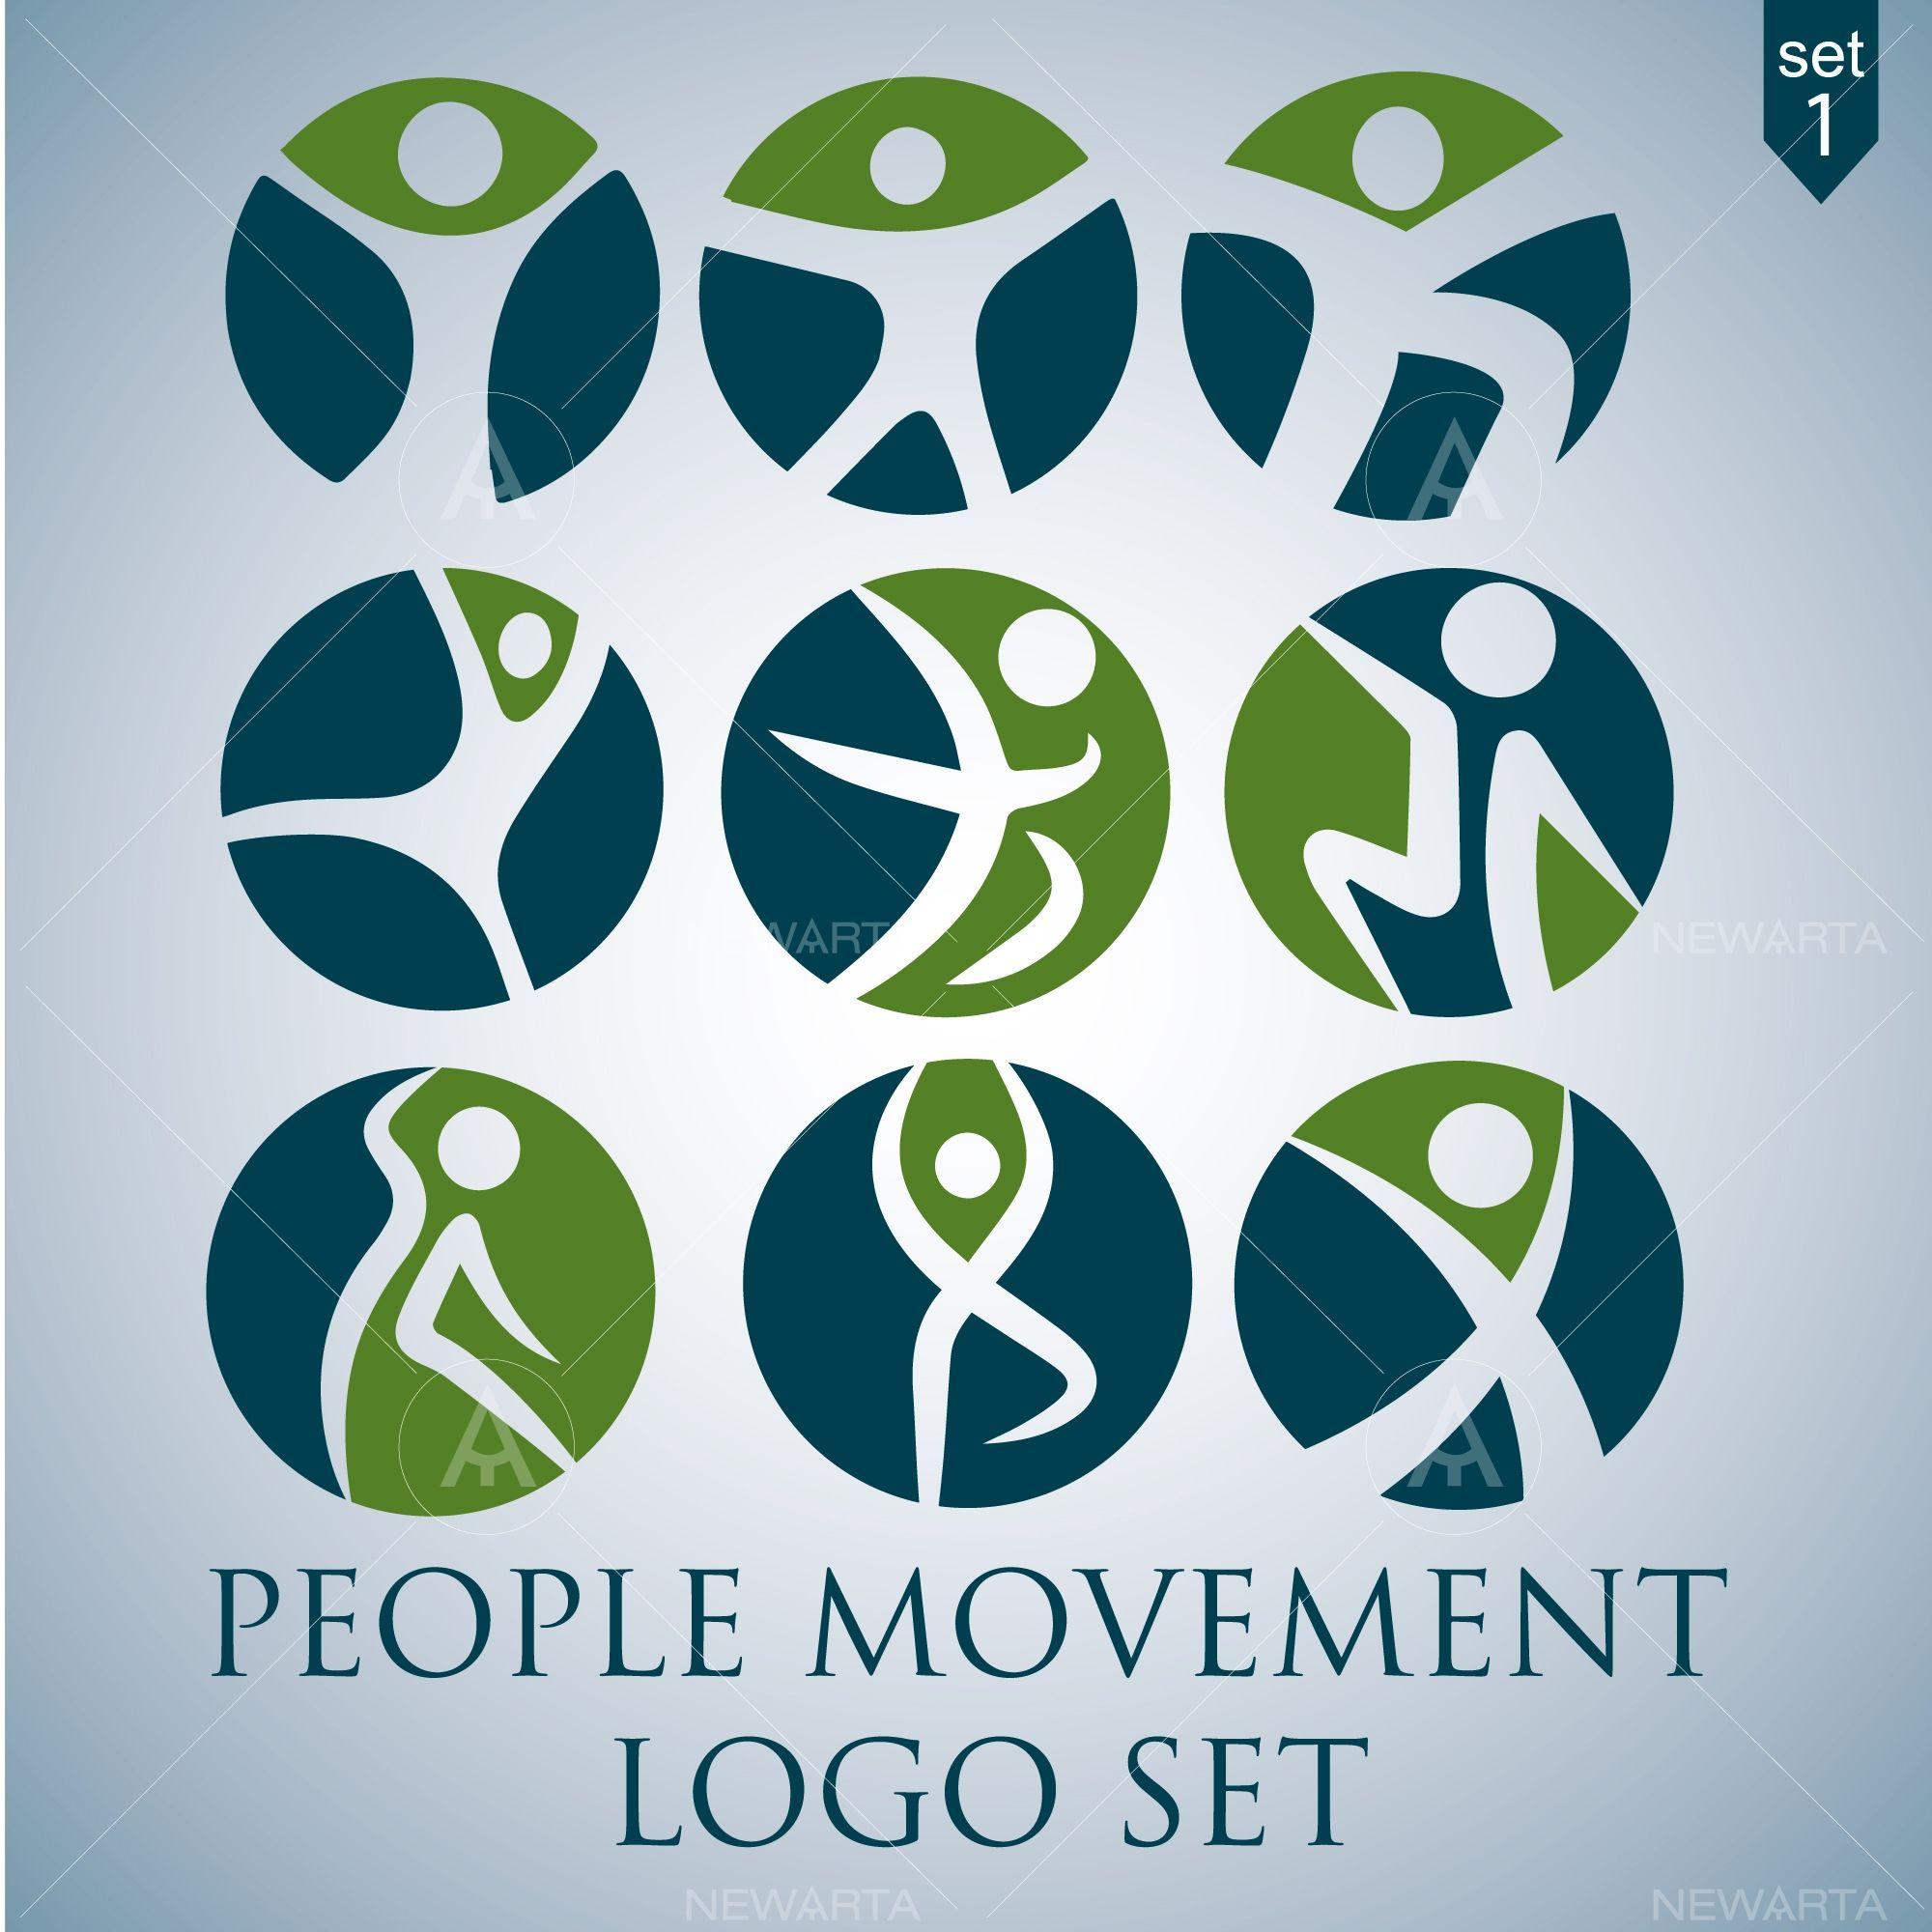 Movement Logo - People movement logo set